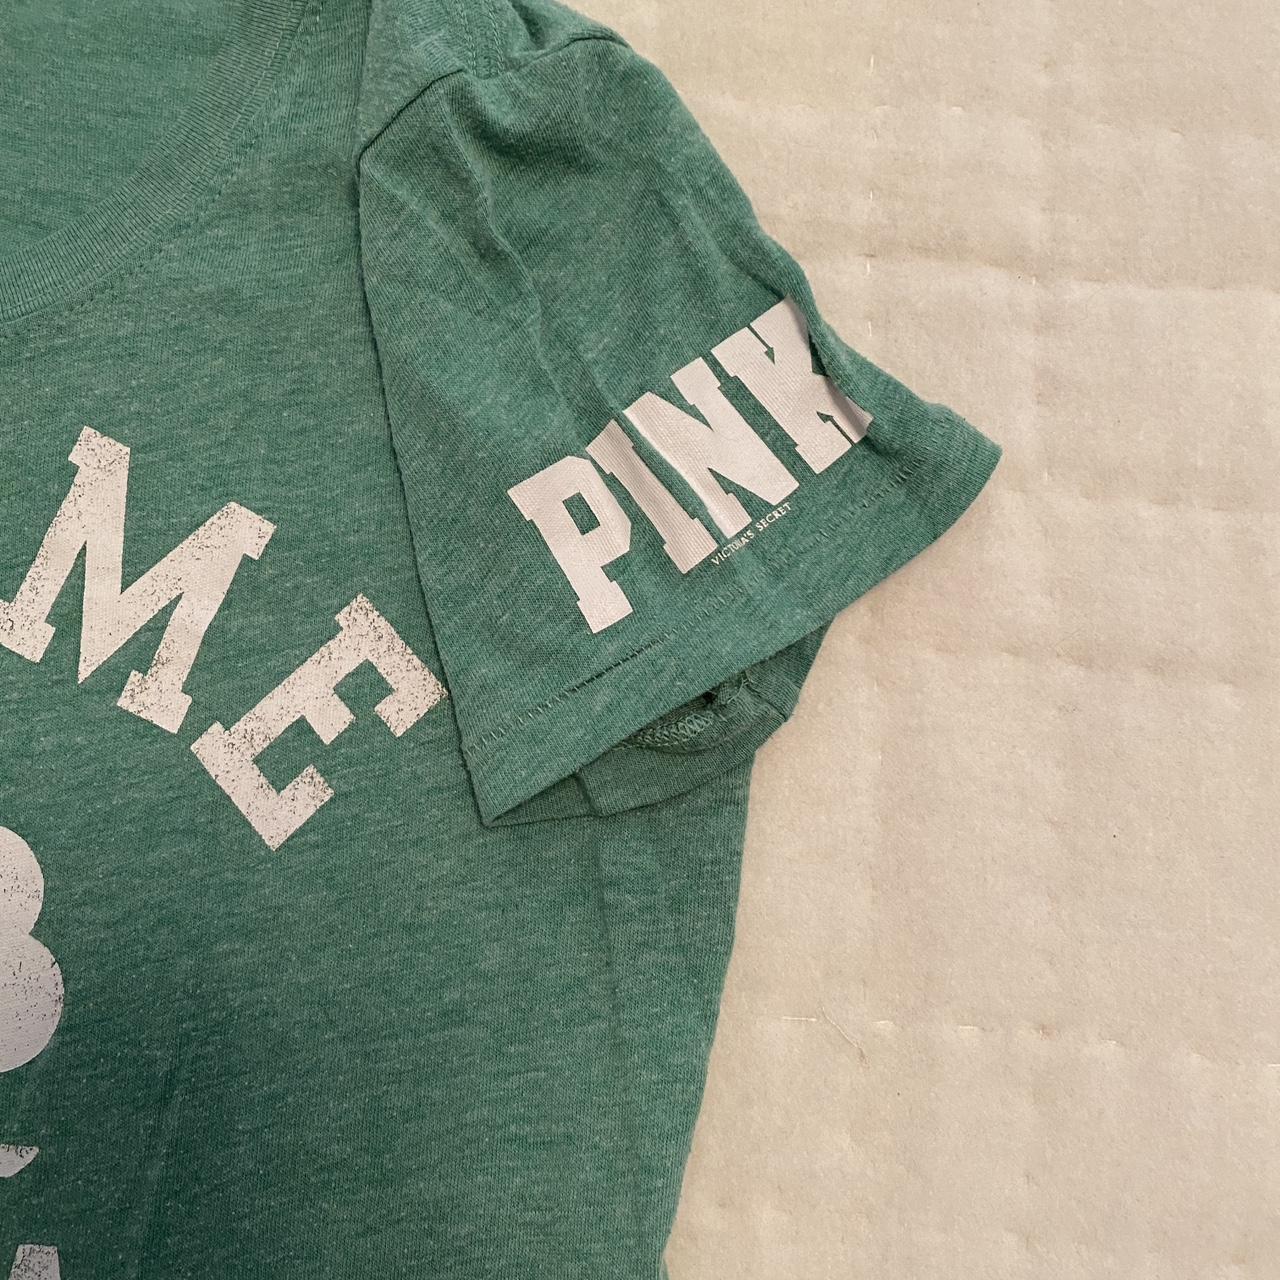 Victoria's Secret Pink Rays Baseball Tee Shirt - Depop